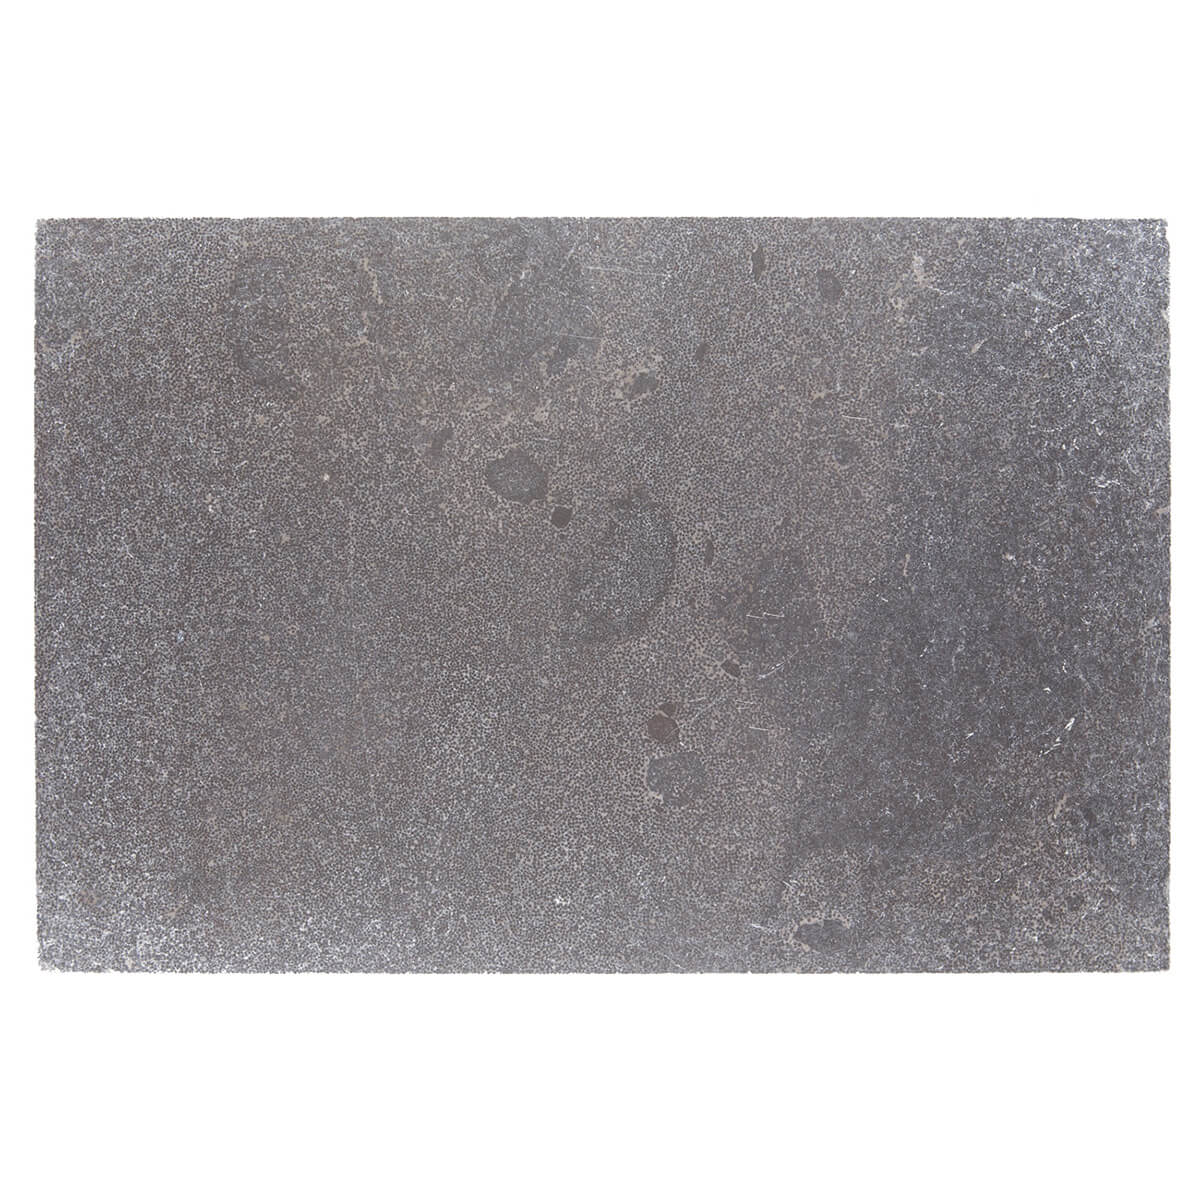 haussmann pierre noire limestone rectangle natural stone field tile 16x24 tumbled